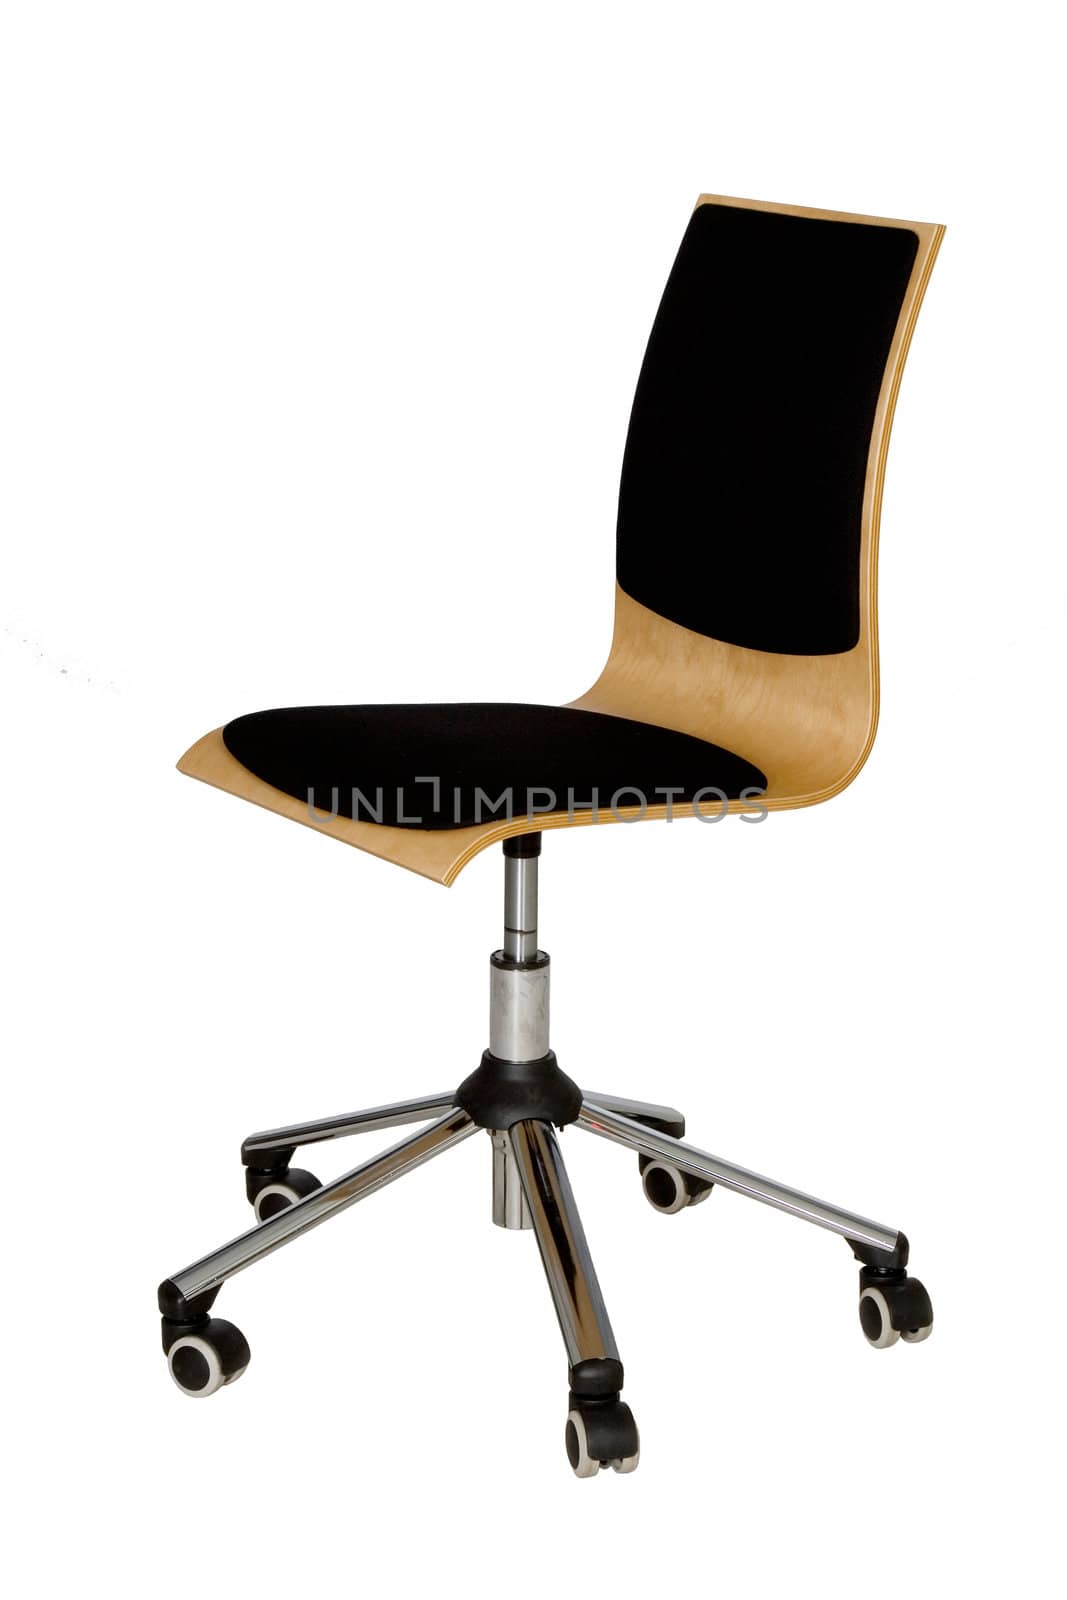 Office chair by fotorobs